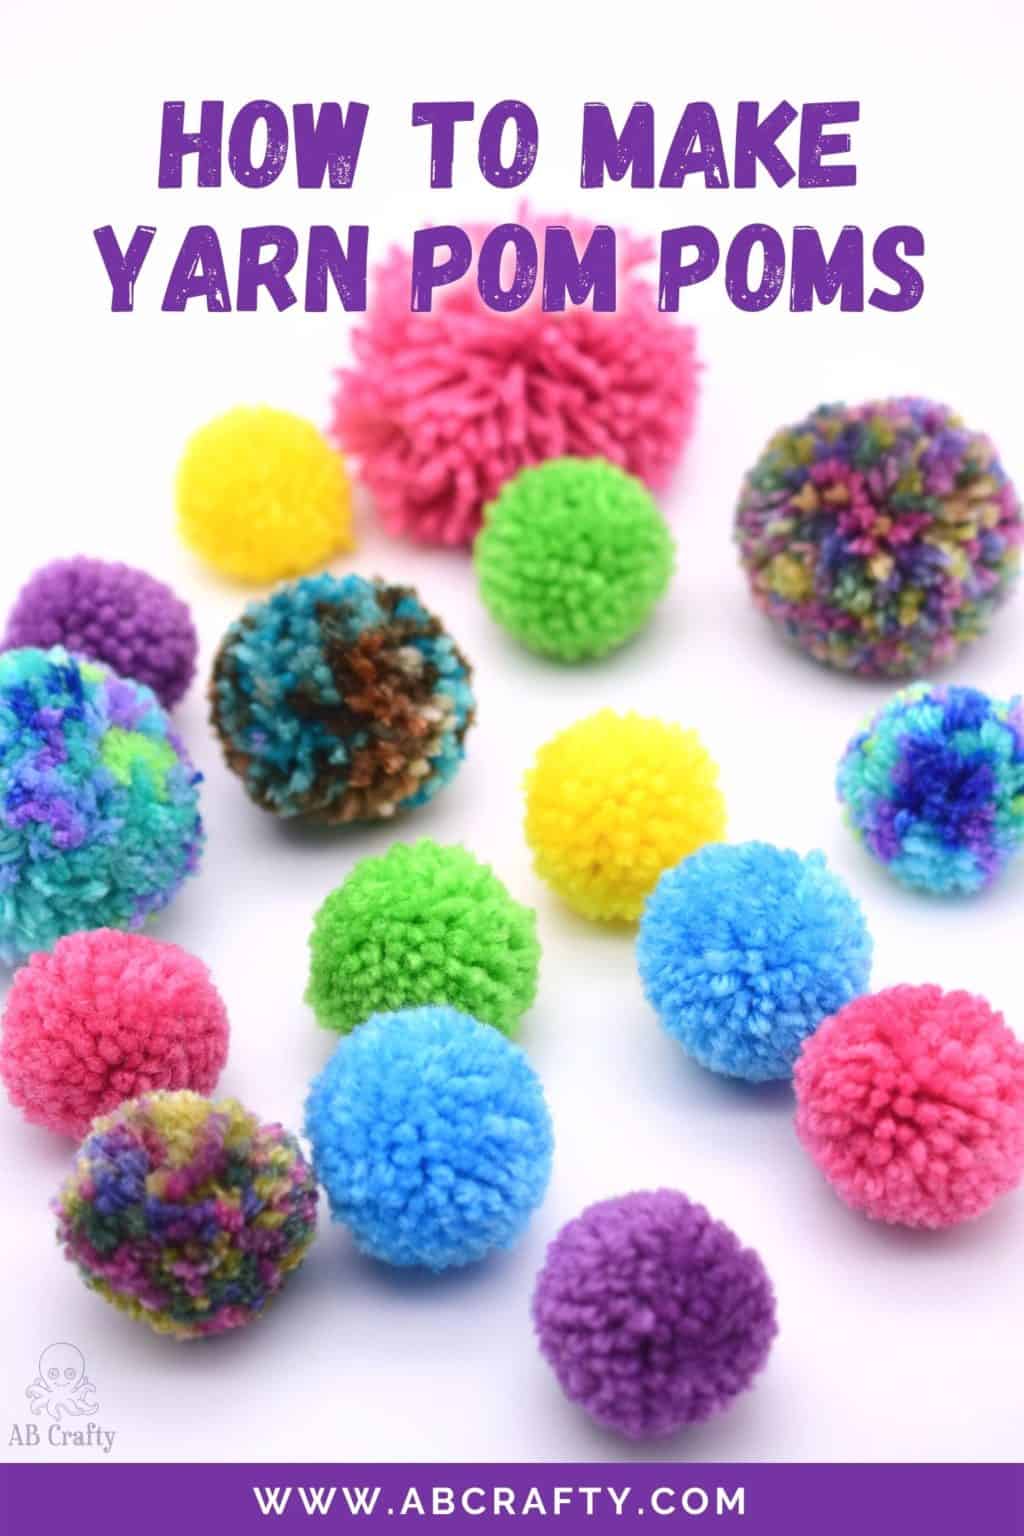 How to Make Yarn Pom Poms with a Pom Pom Maker - AB Crafty